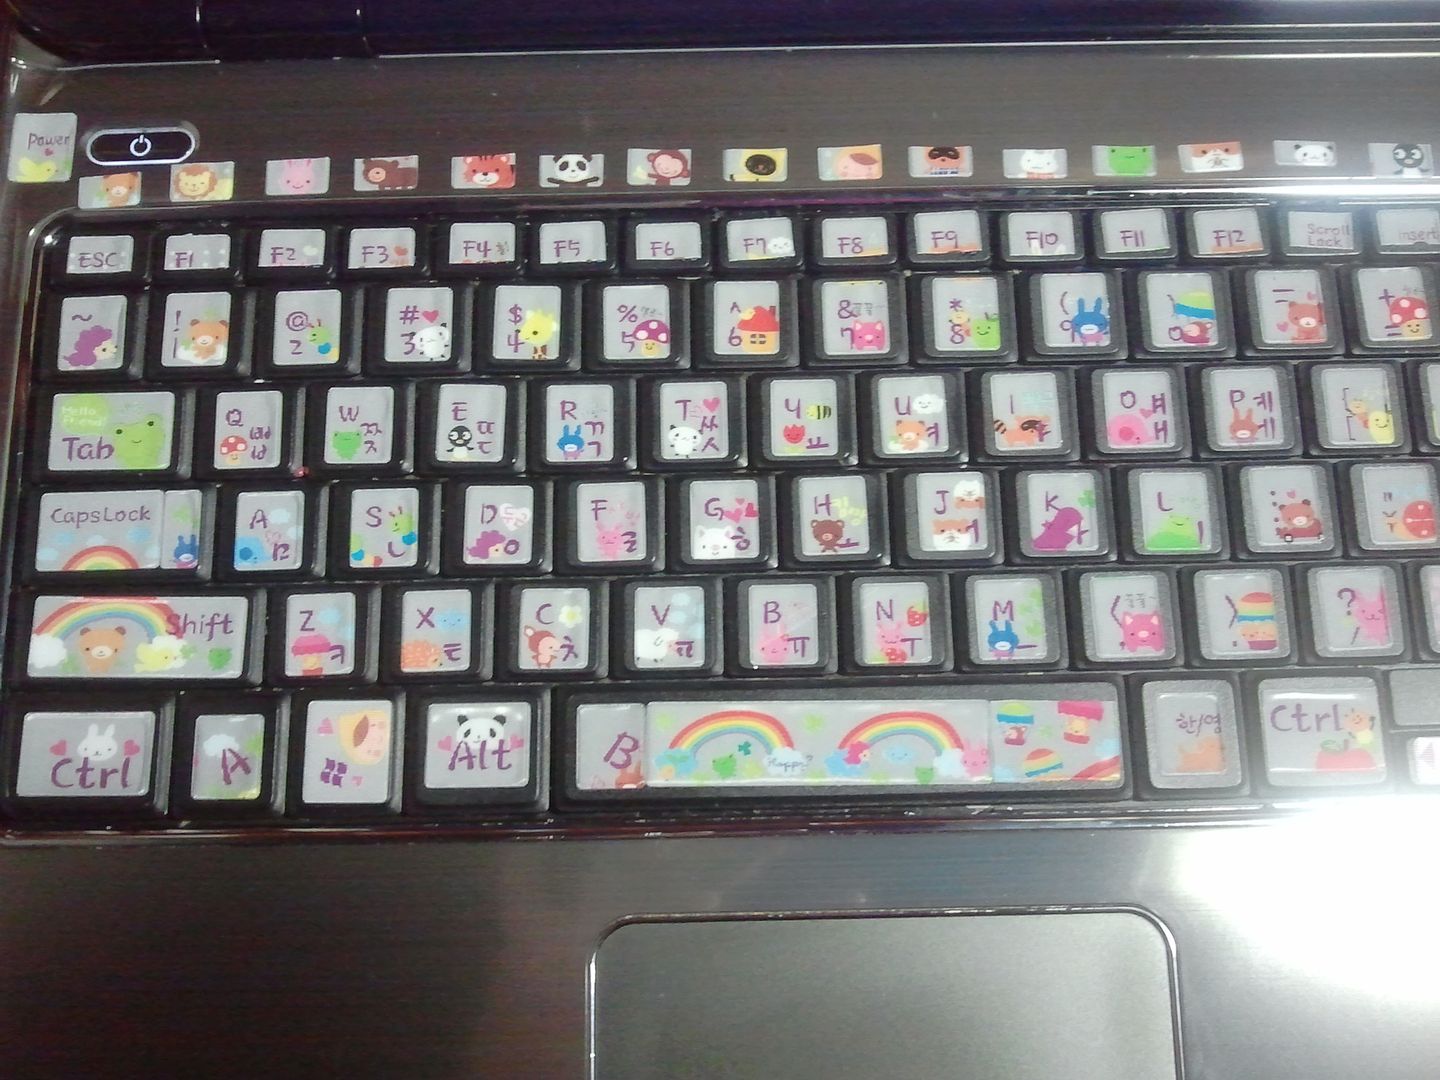 Fun Keyboard Stickers For Laptops